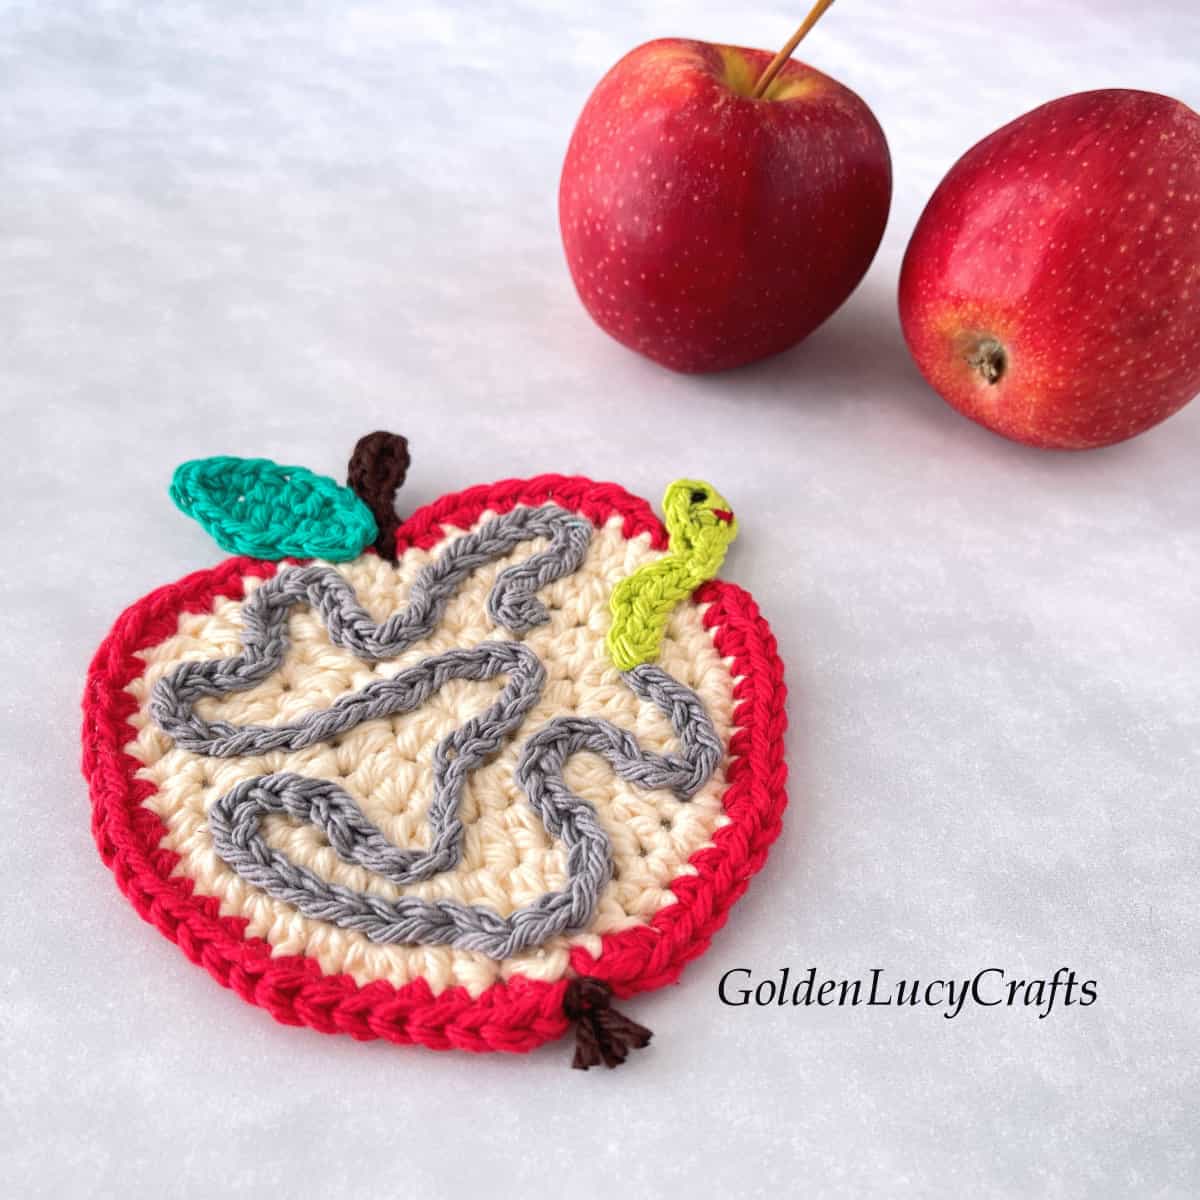 Crochet apple with worm applique.